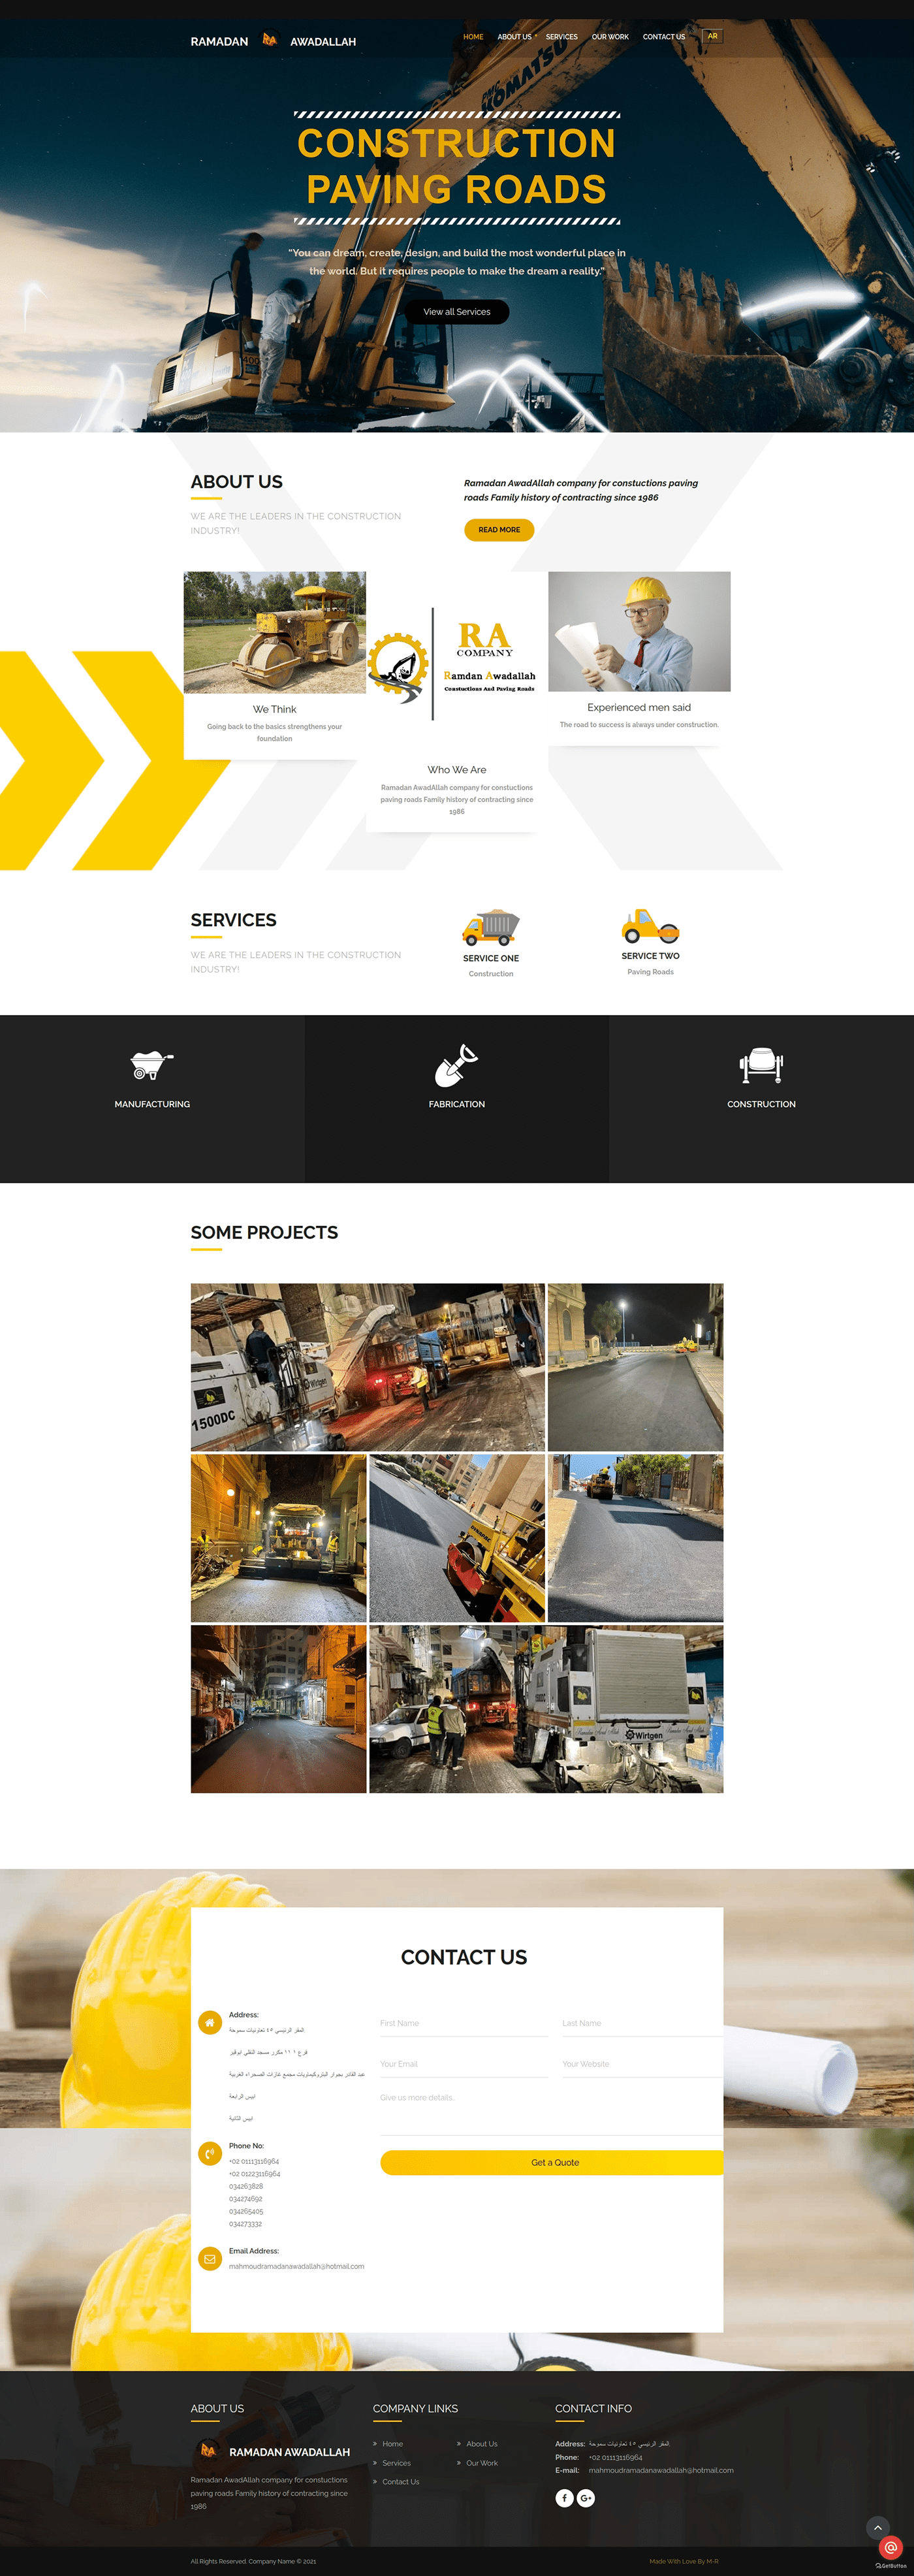 construction roads company Website paving roads